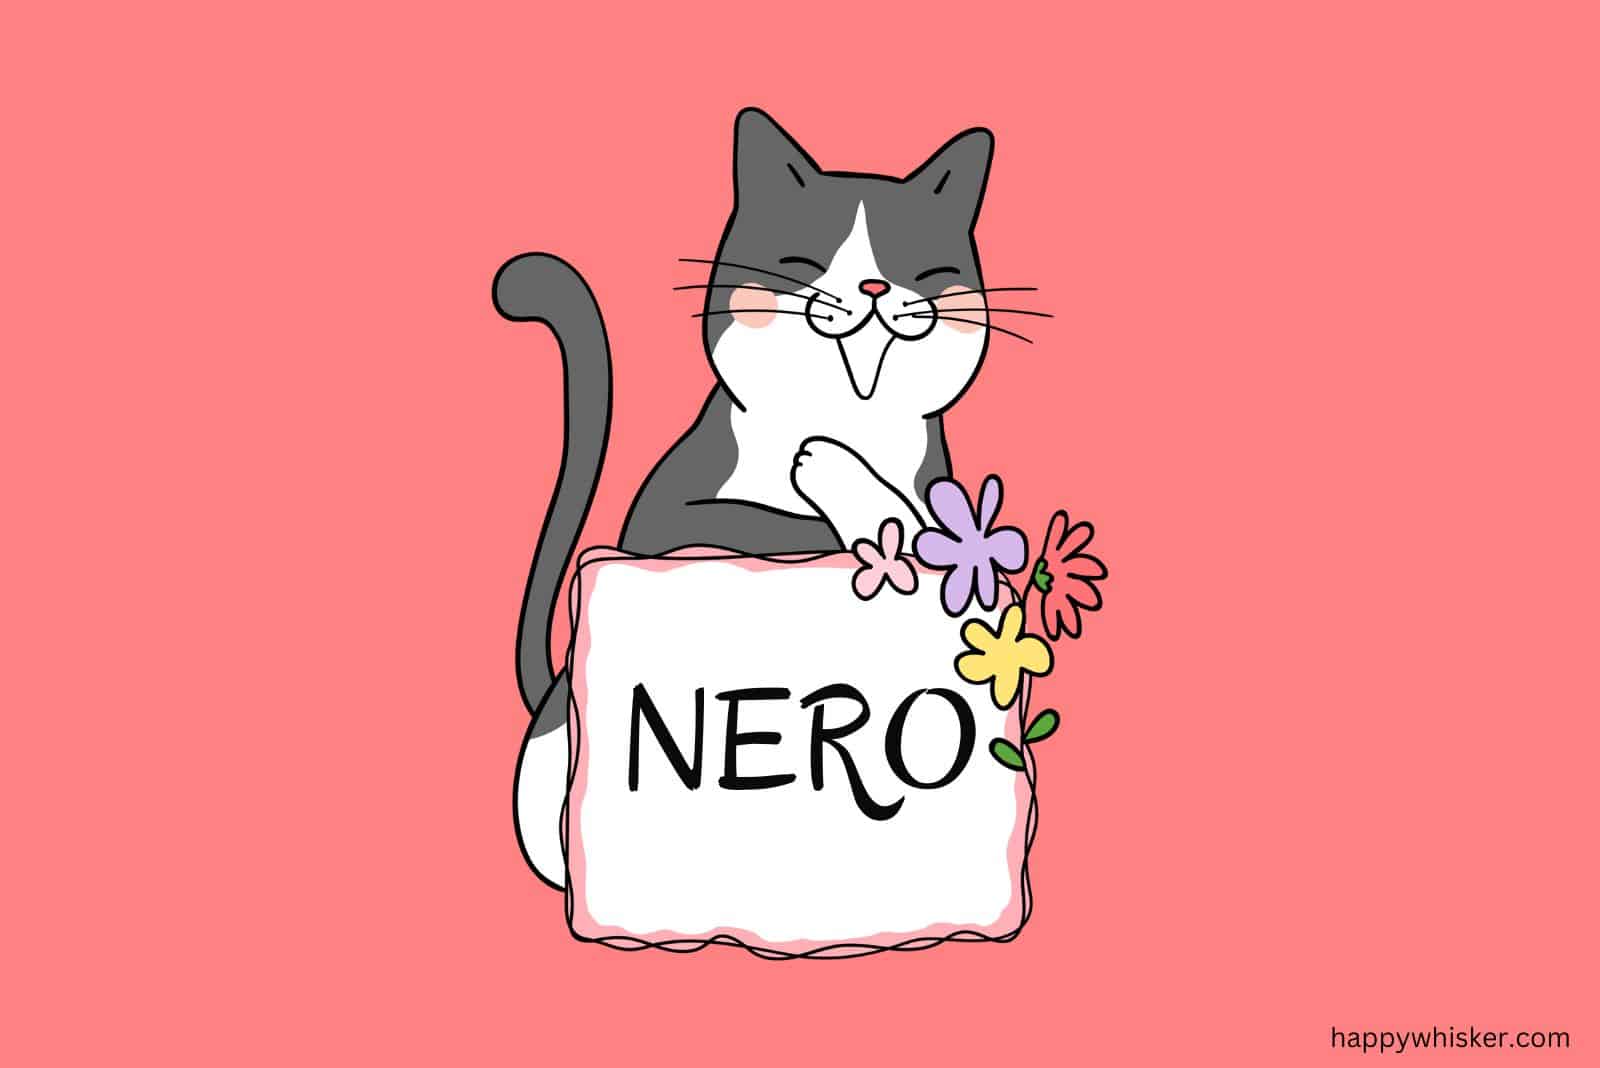 silly cat name nero illustration